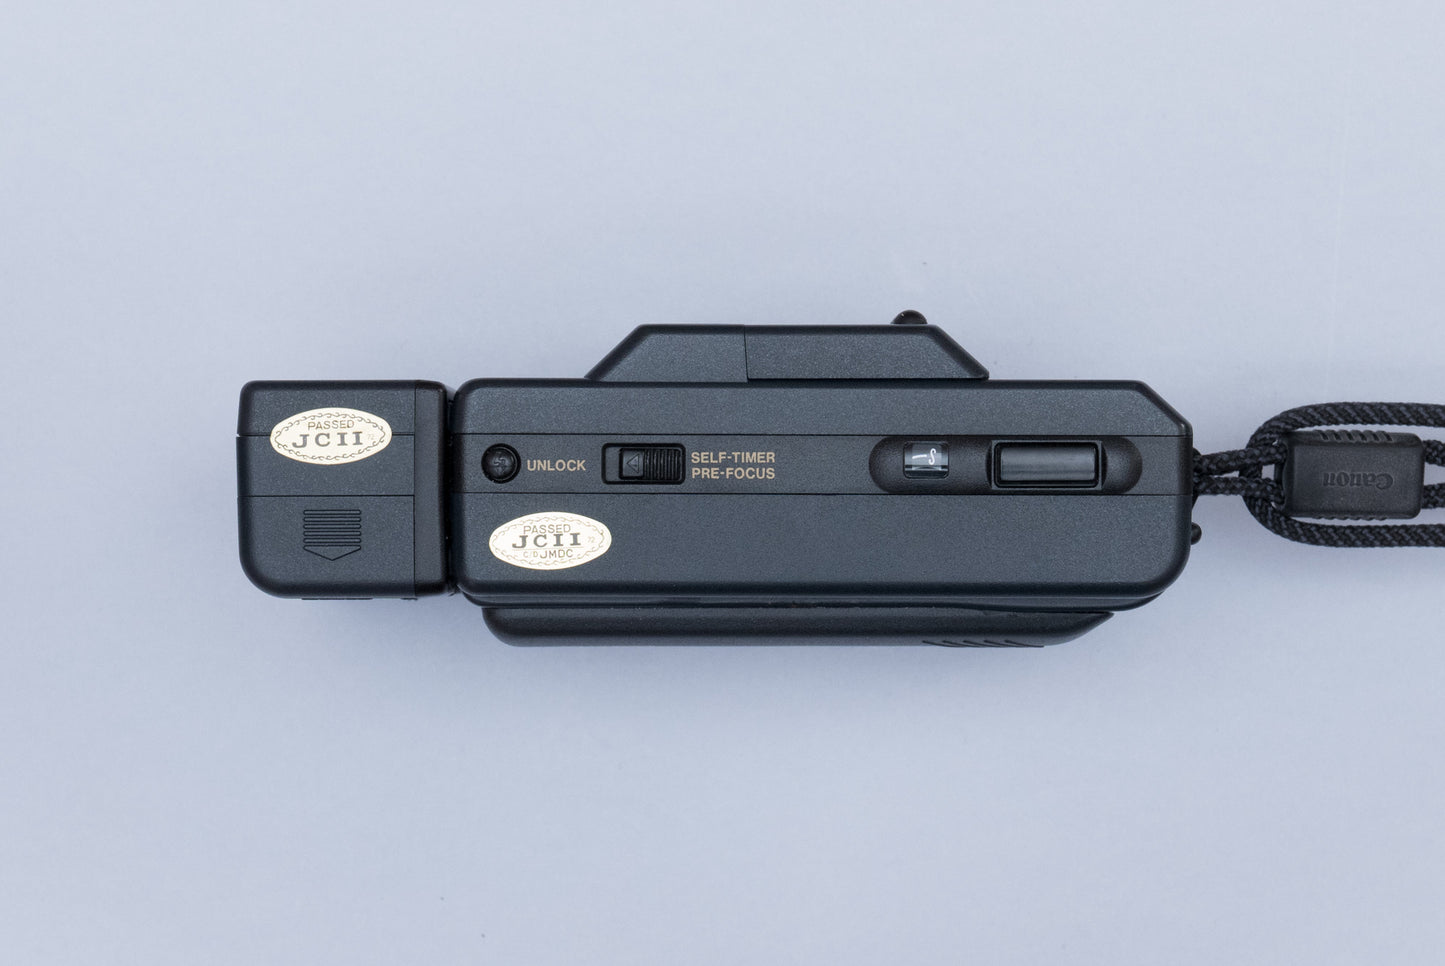 Canon MC with MC-S Flash Compact 35mm Film Camera